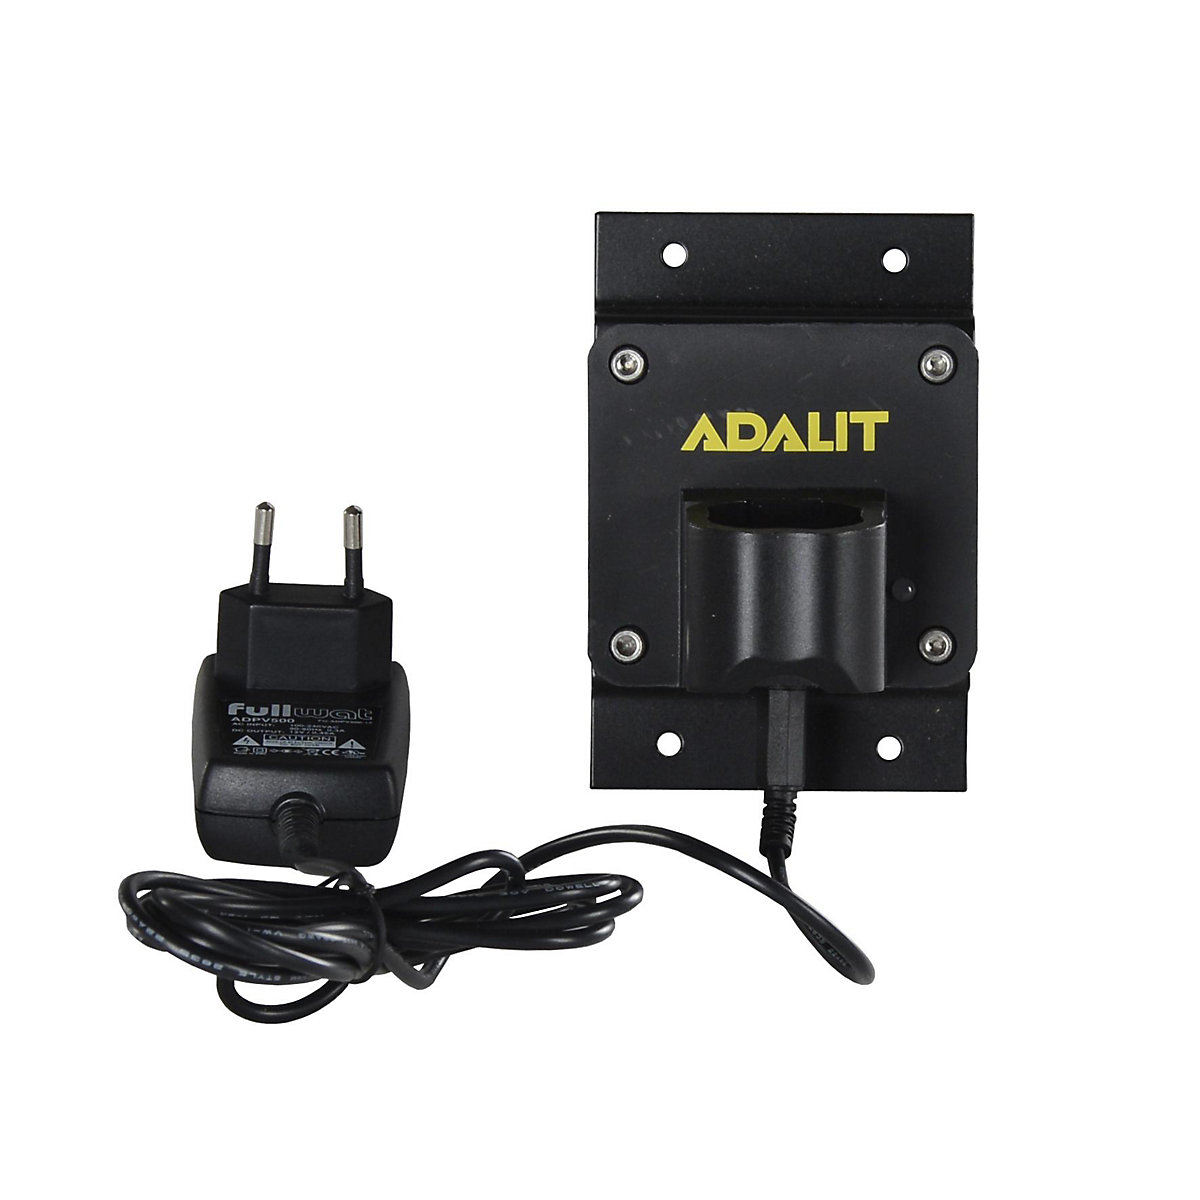 Cargador para lámparas de mano ADALIT®, para pilas recargables de polímero de litio, para 1 lámpara LED de seguridad